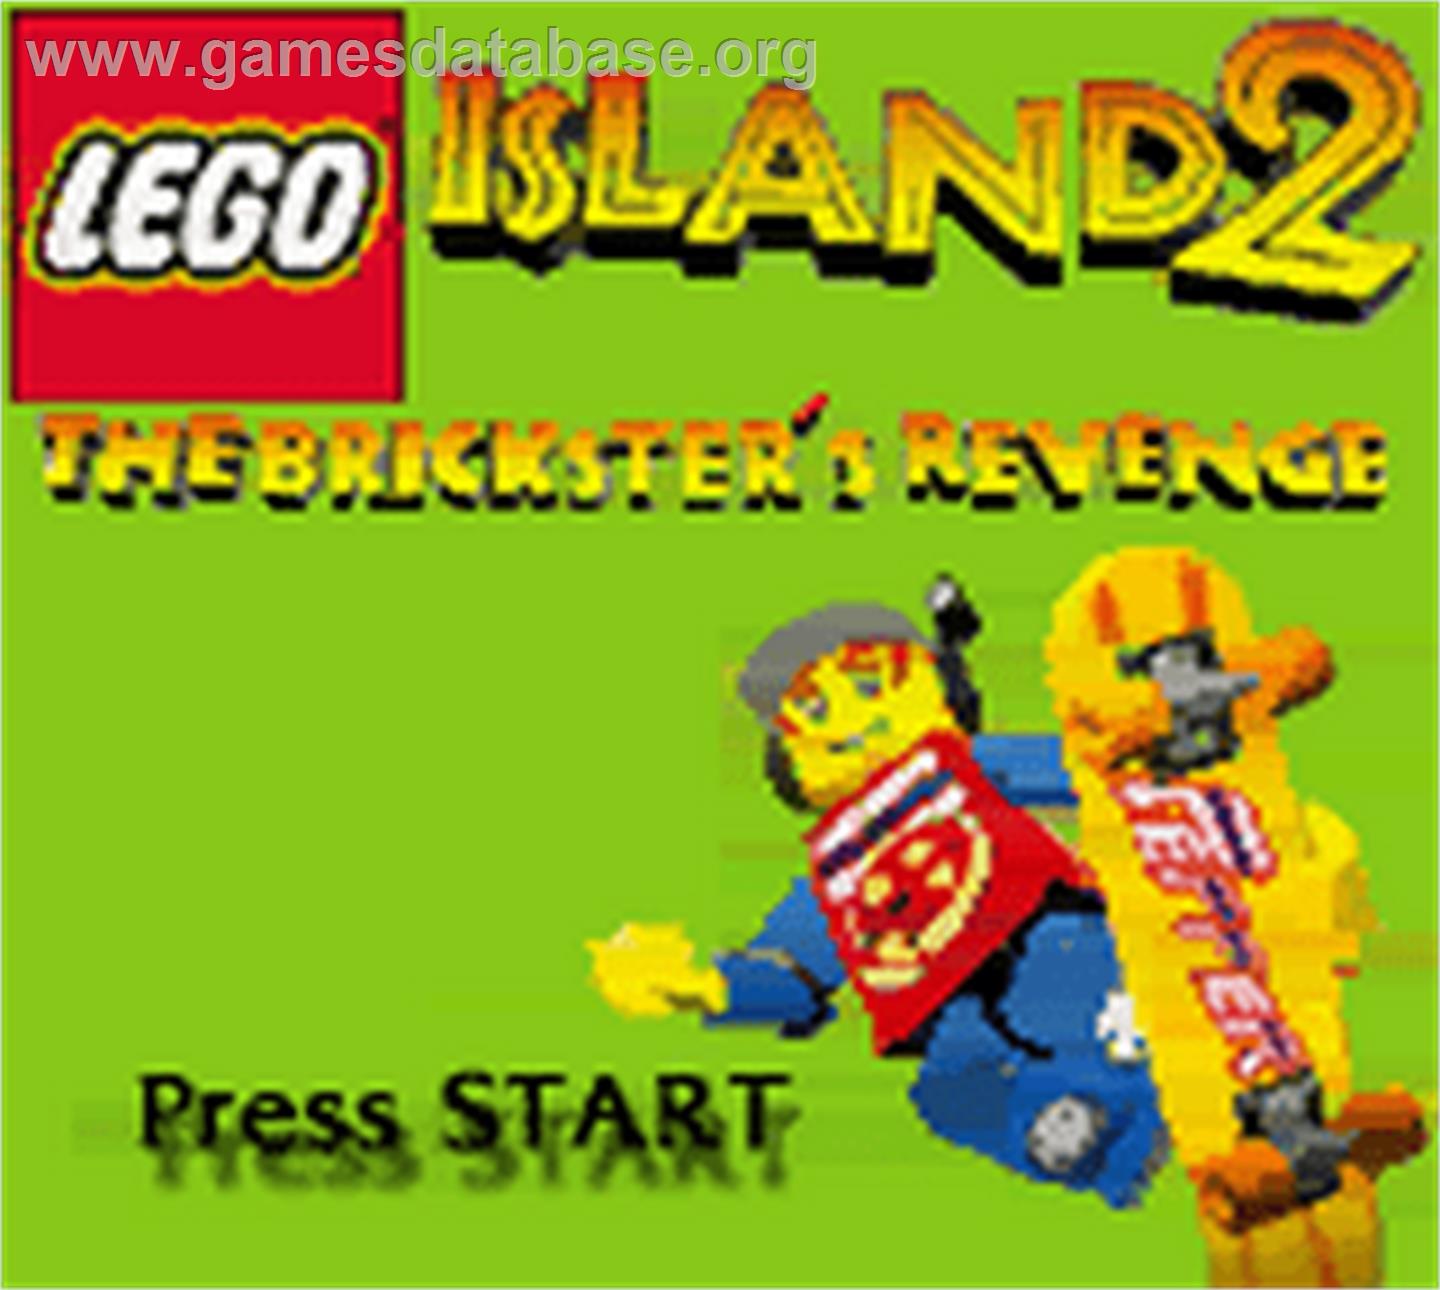 LEGO Island 2: The Brickster's Revenge - Nintendo Game Boy Color - Artwork - Title Screen